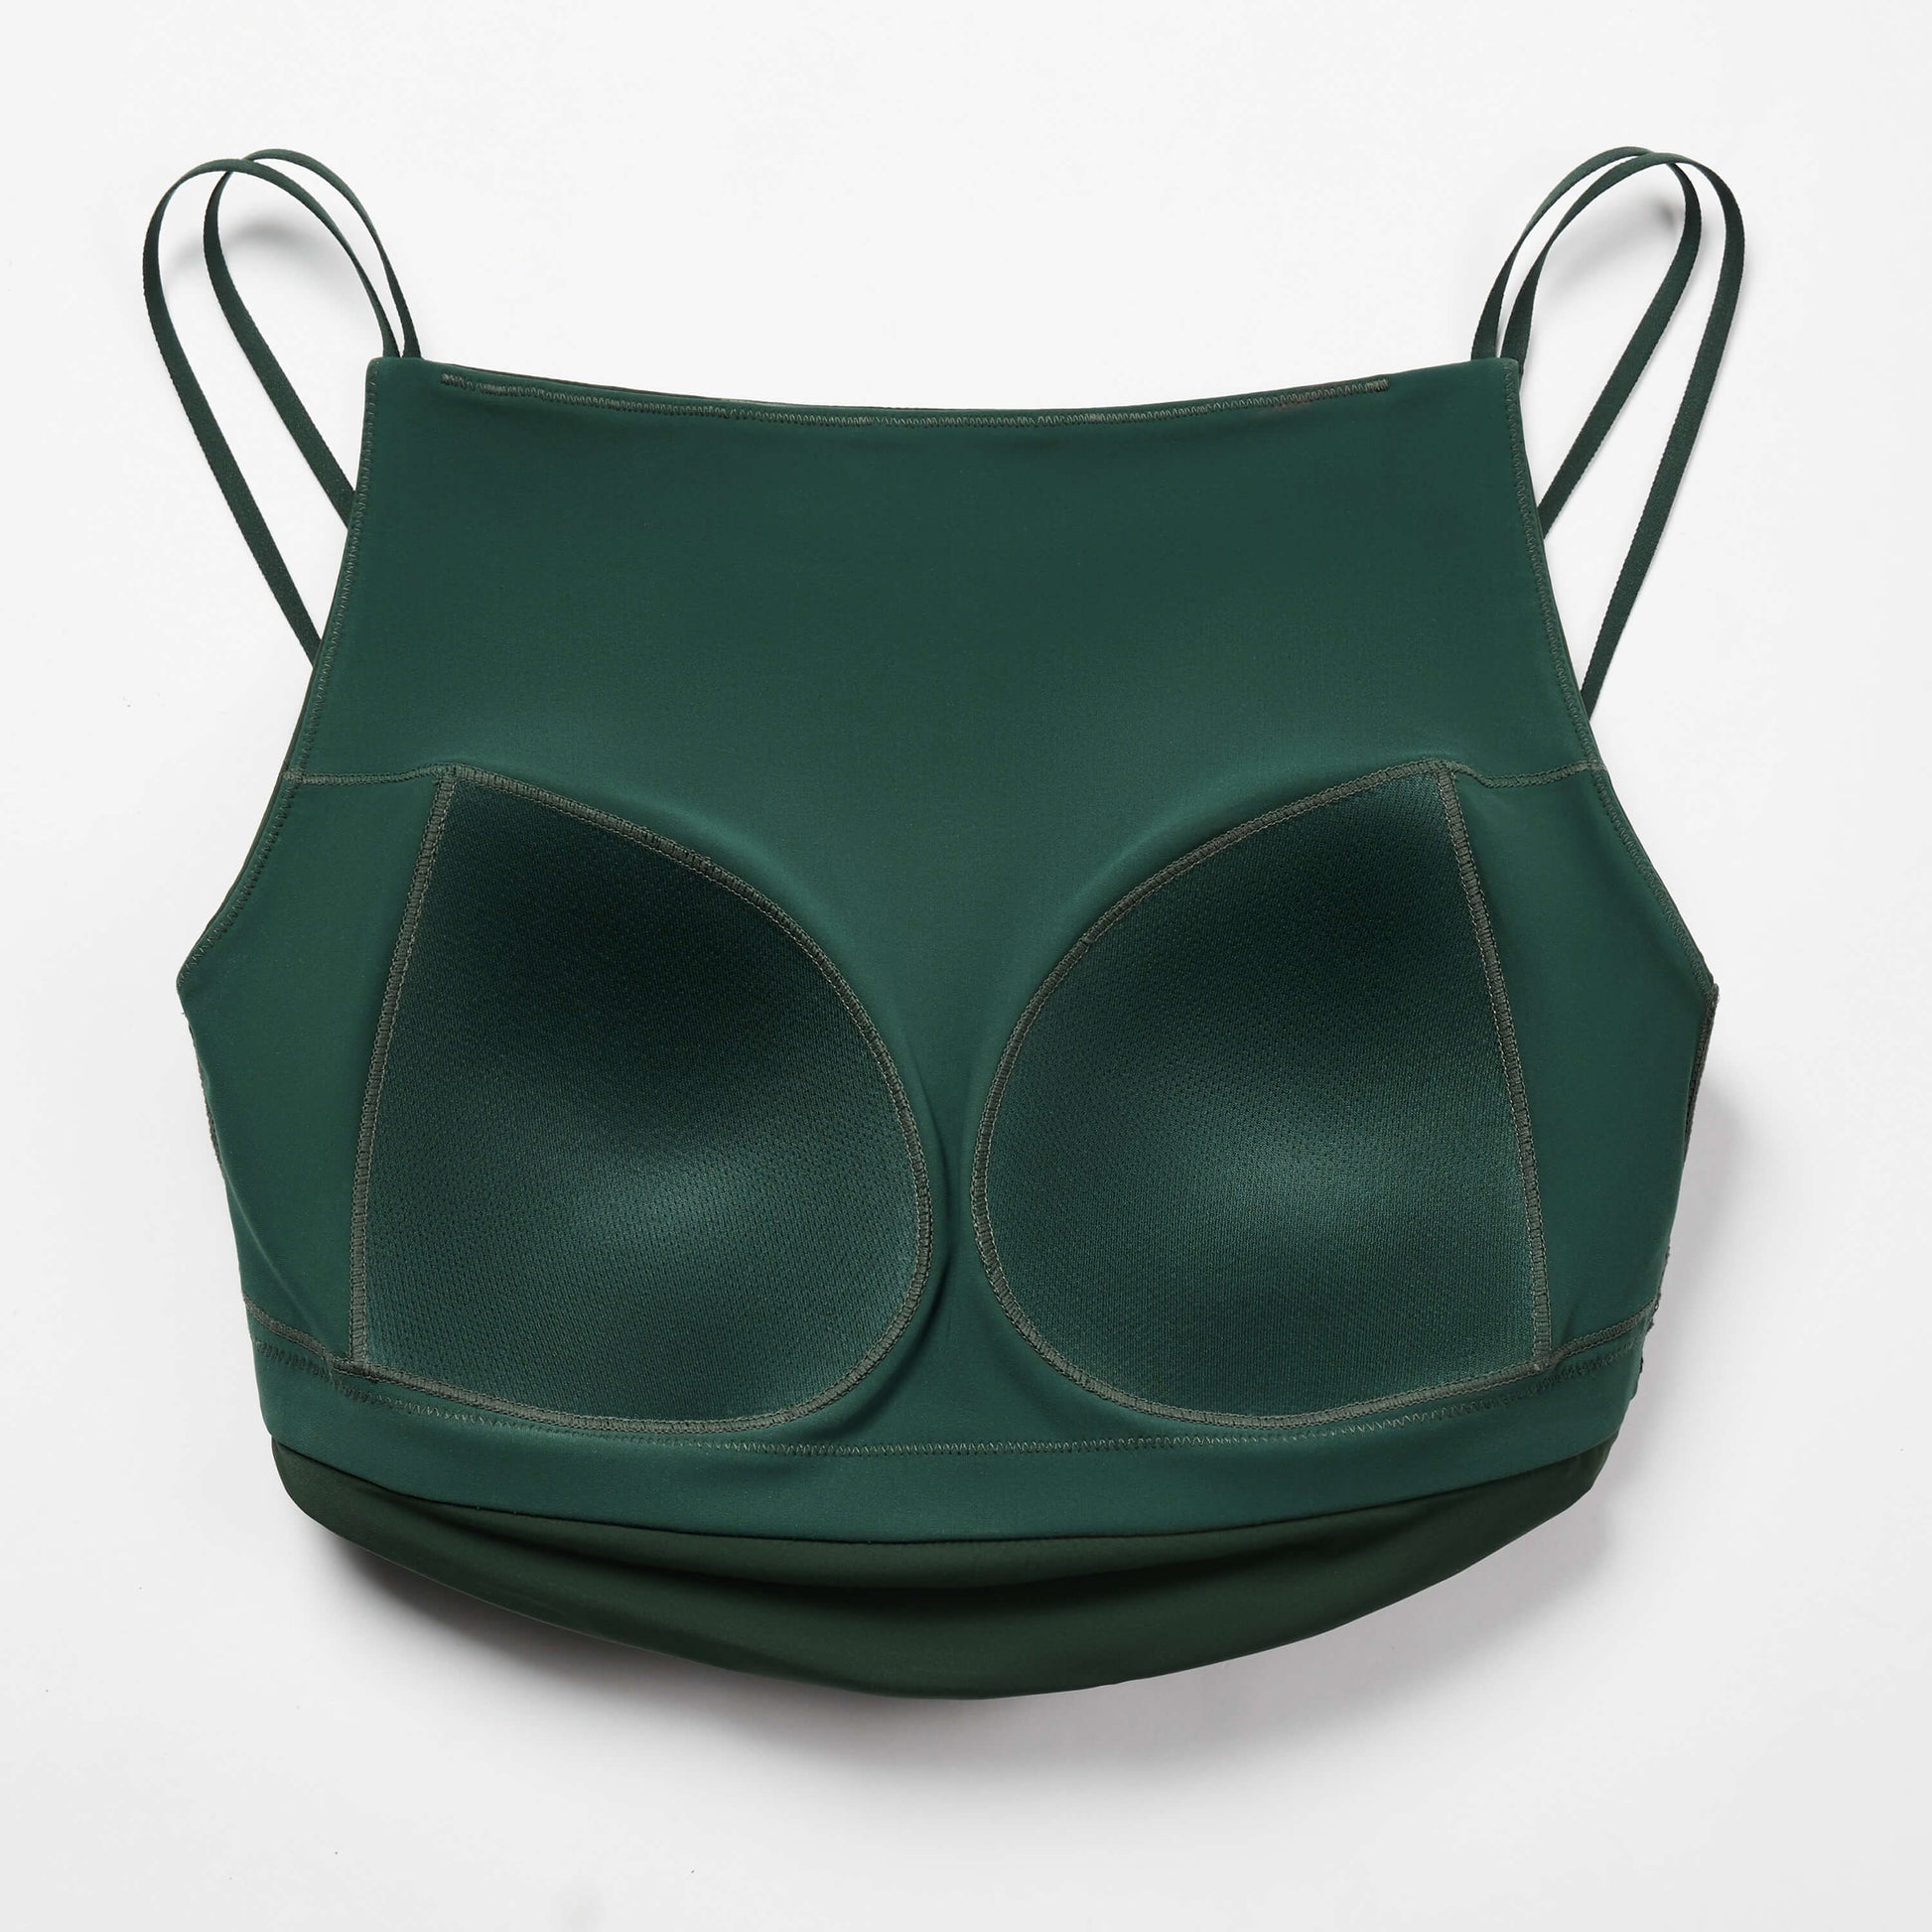 The inside of dark green sports bra with sew-in bra pads